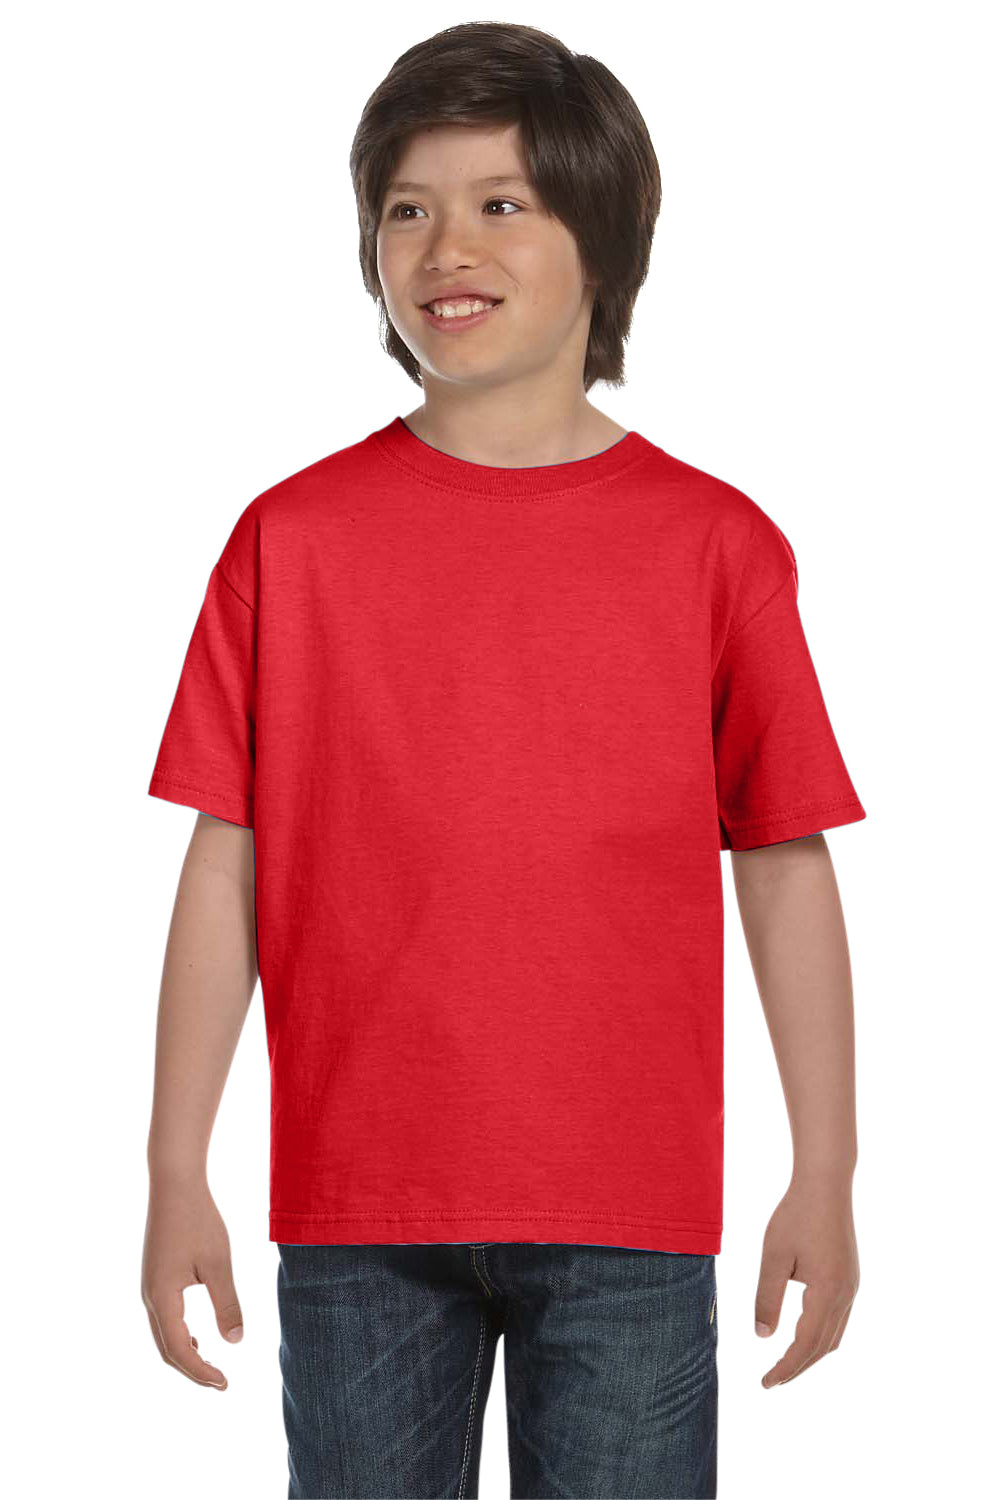 Hanes 5480 ComfortSoft Short Sleeve Crewneck T-Shirt Athletic Red Front